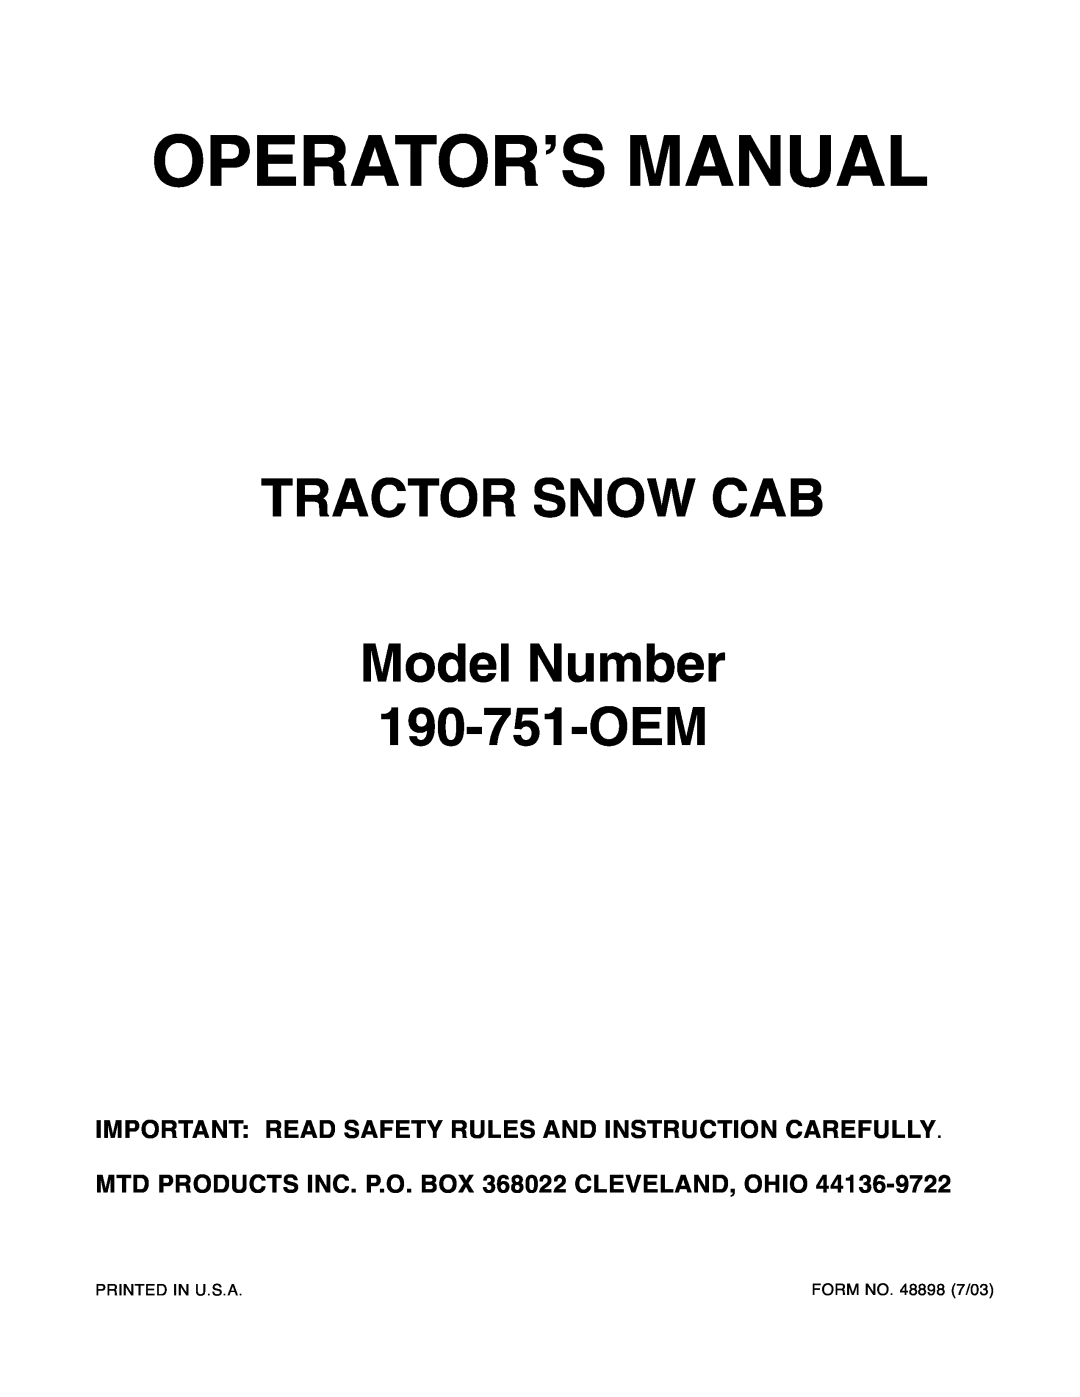 Bolens 190-751-OEM manual MTD PRODUCTS INC. P.O. BOX 368022 CLEVELAND, OHIO, Operator’S Manual, FORM NO. 48898 7/03 